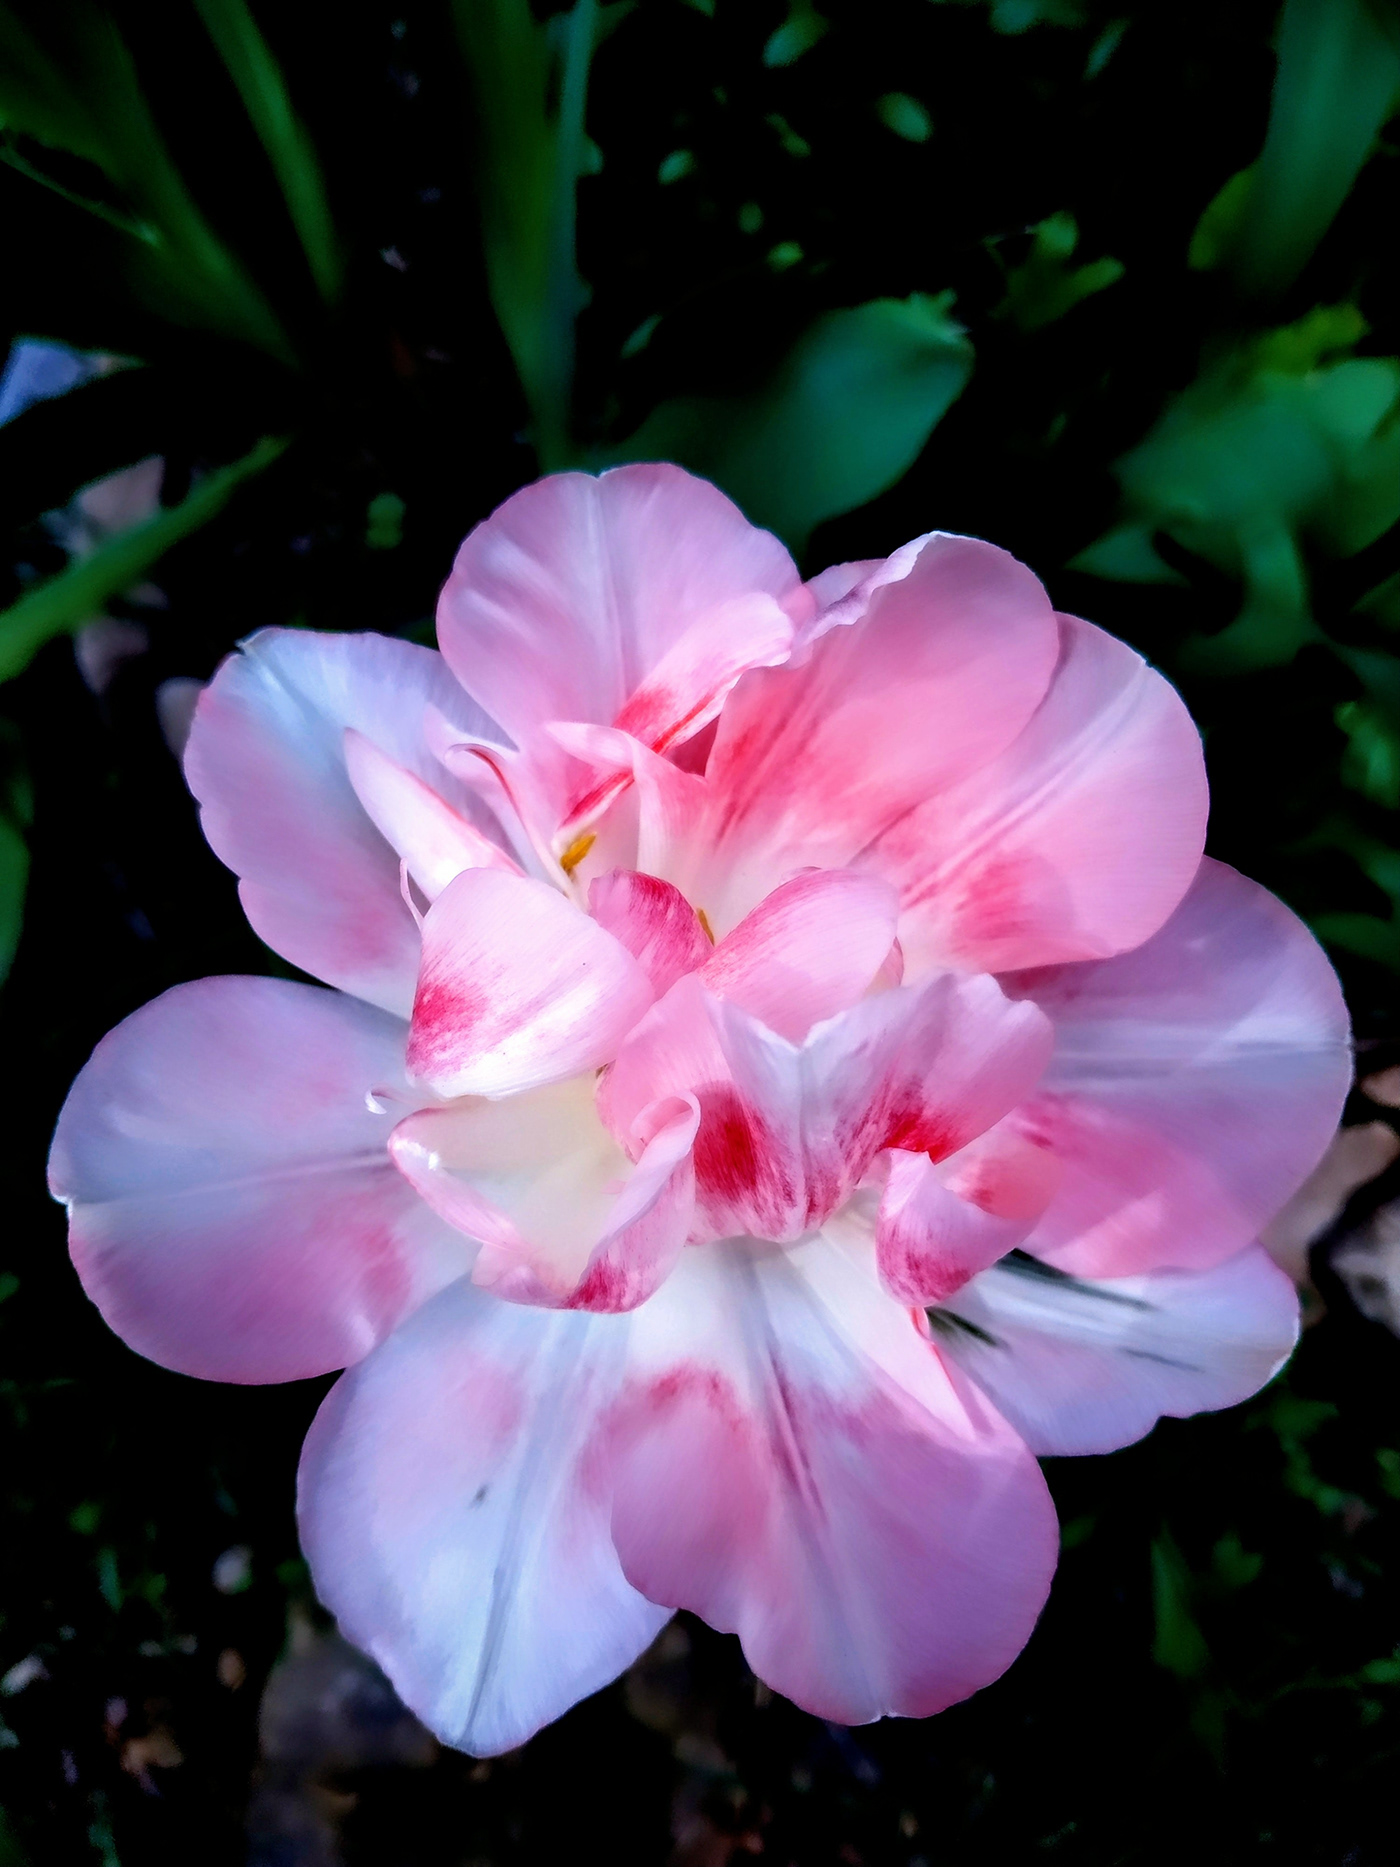 kiev photo Tenderness of tulips